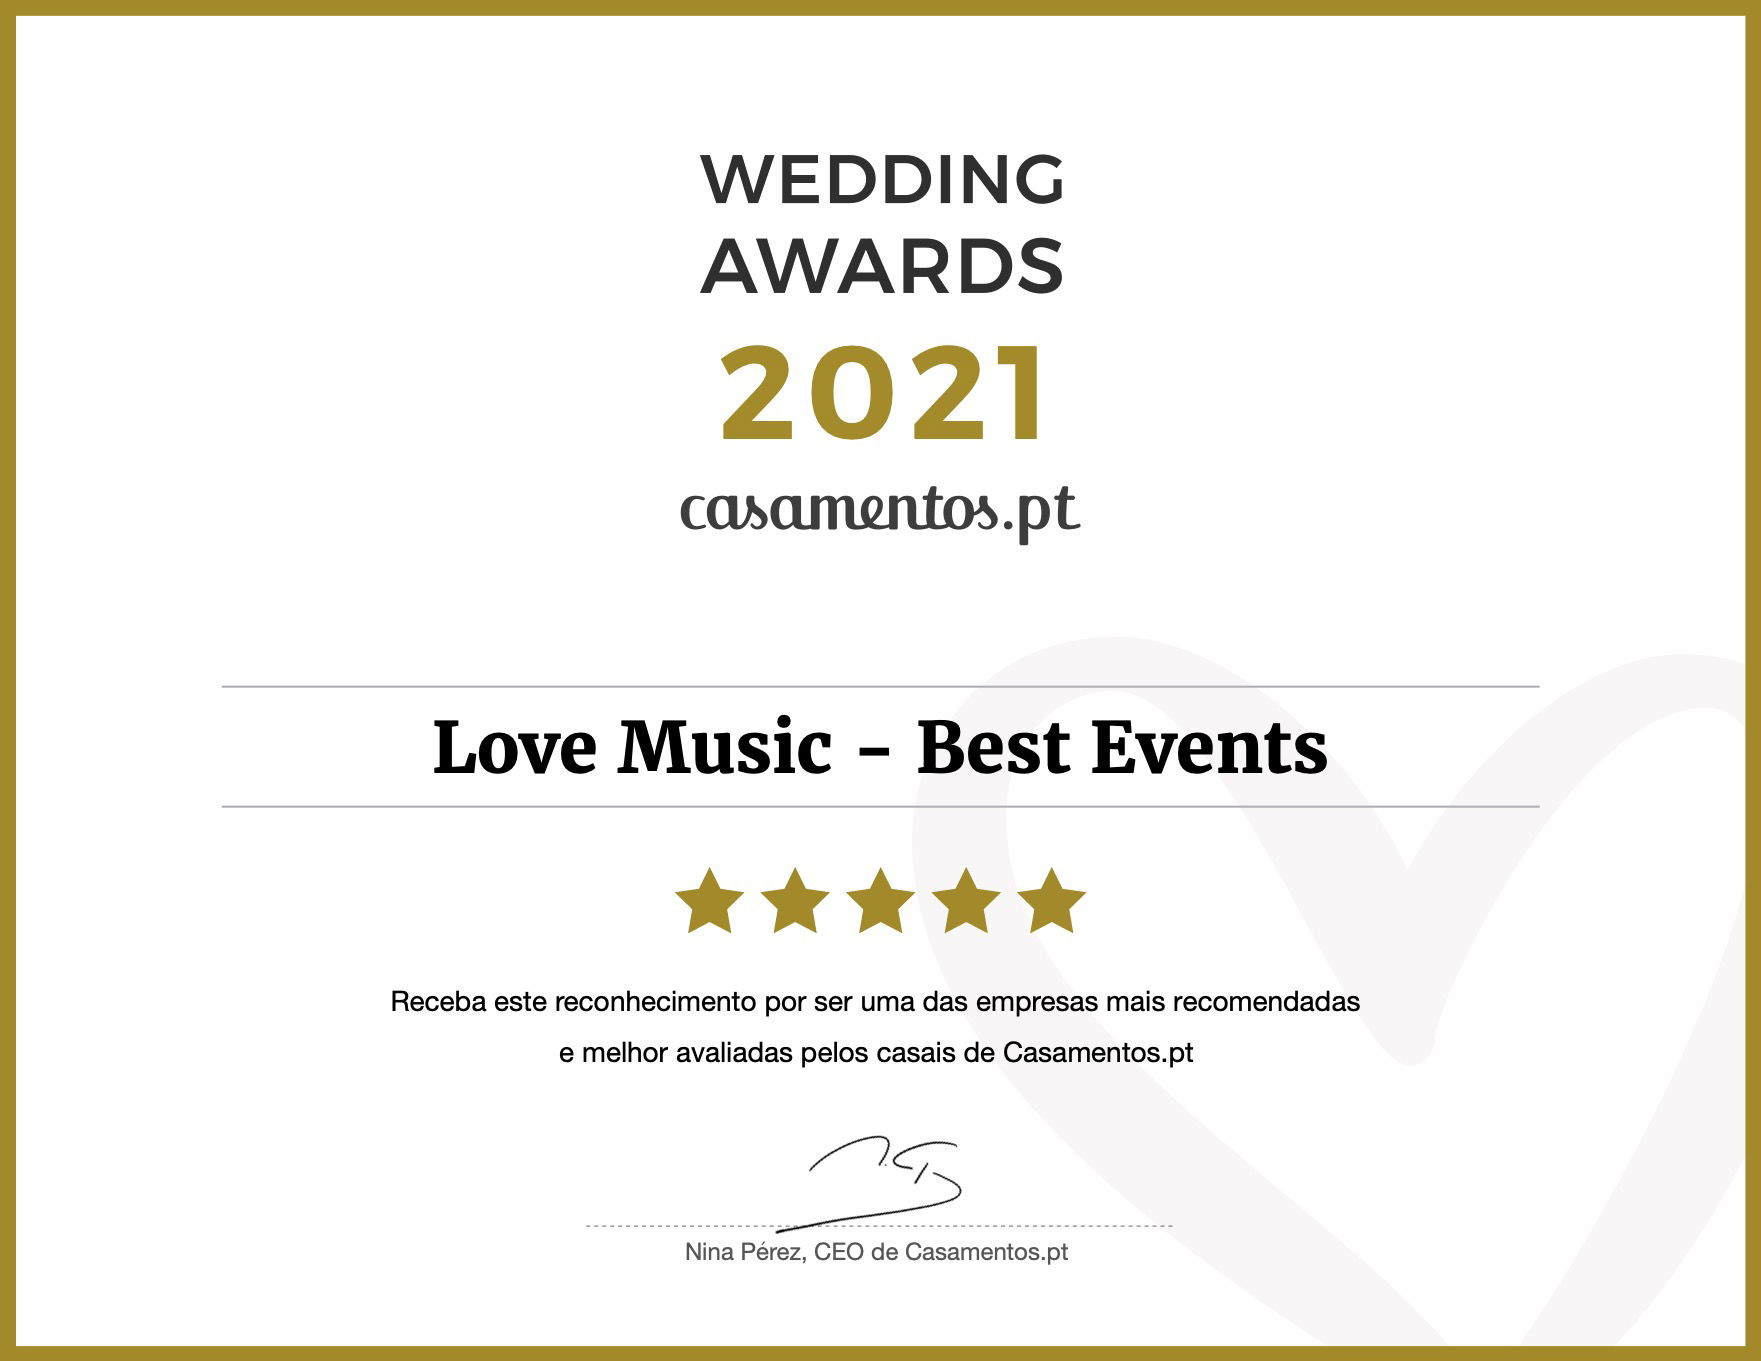 Wedding Awards 2021 | Love Music - Best Events - Casamentos.pt 🏆